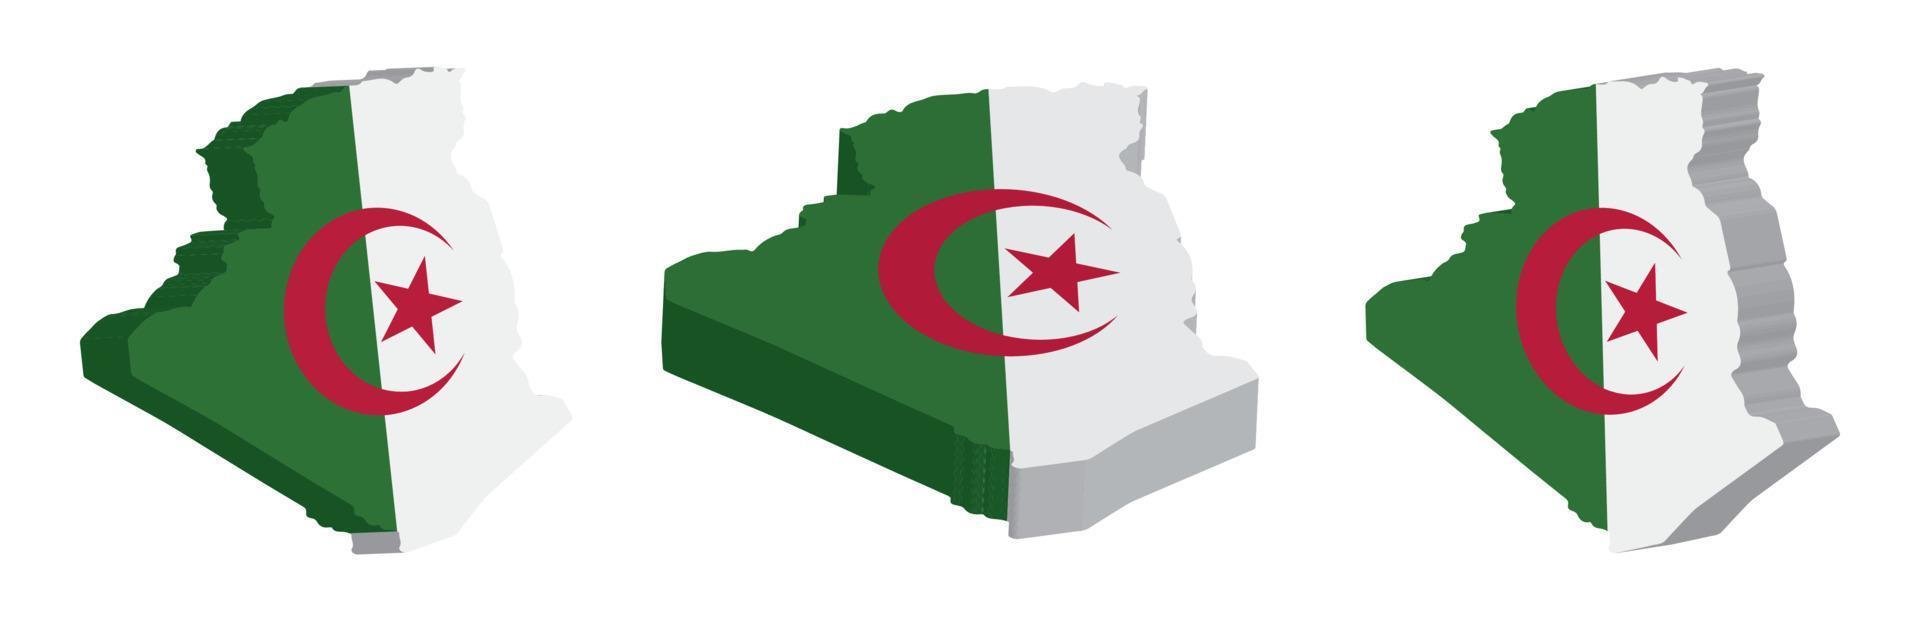 Realistic 3D Map of Algeria Vector Design Template